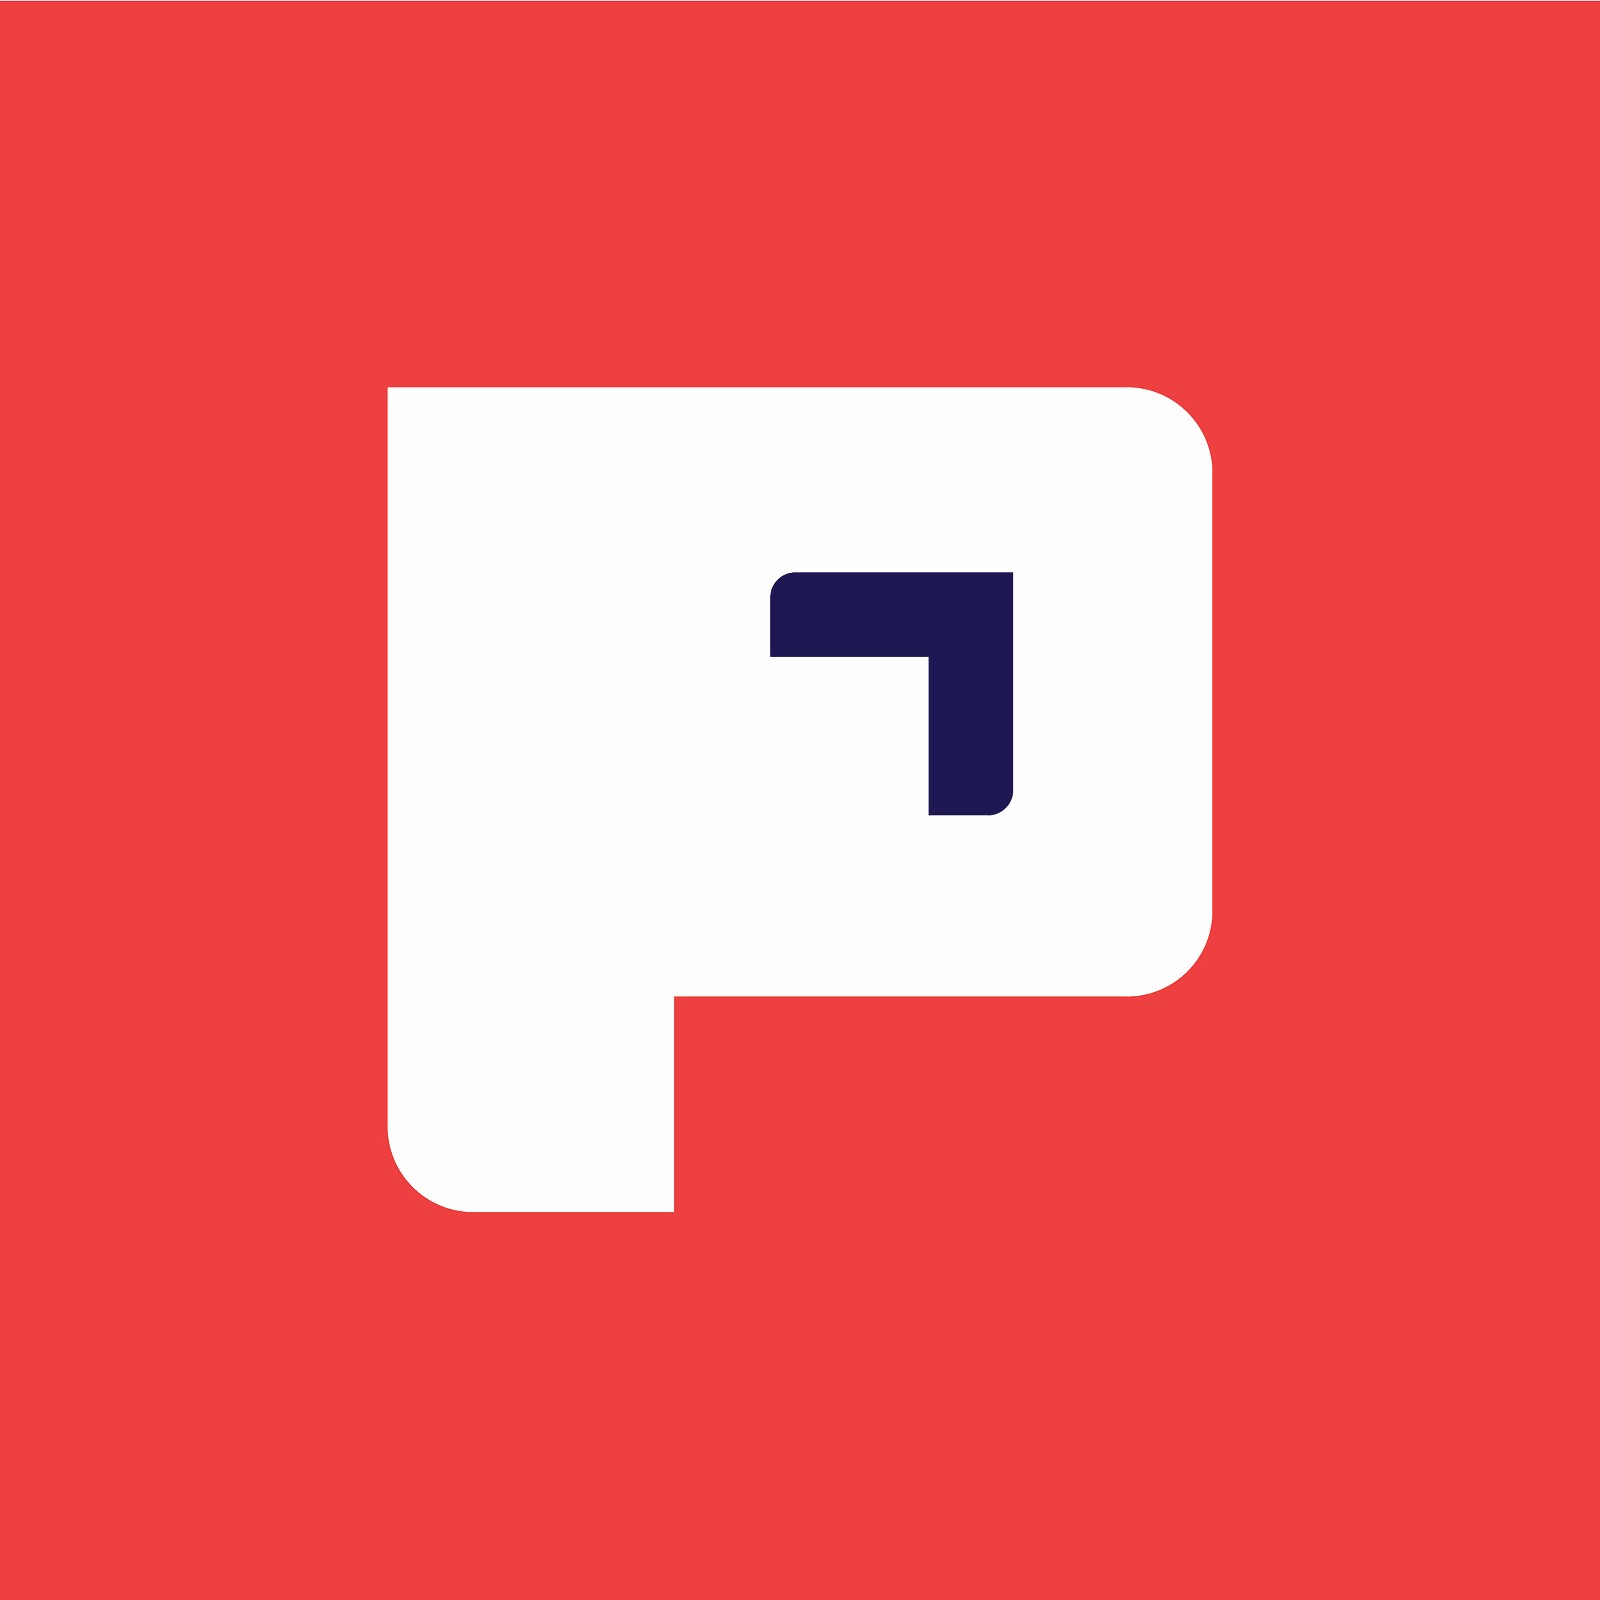 The Paceline P logo